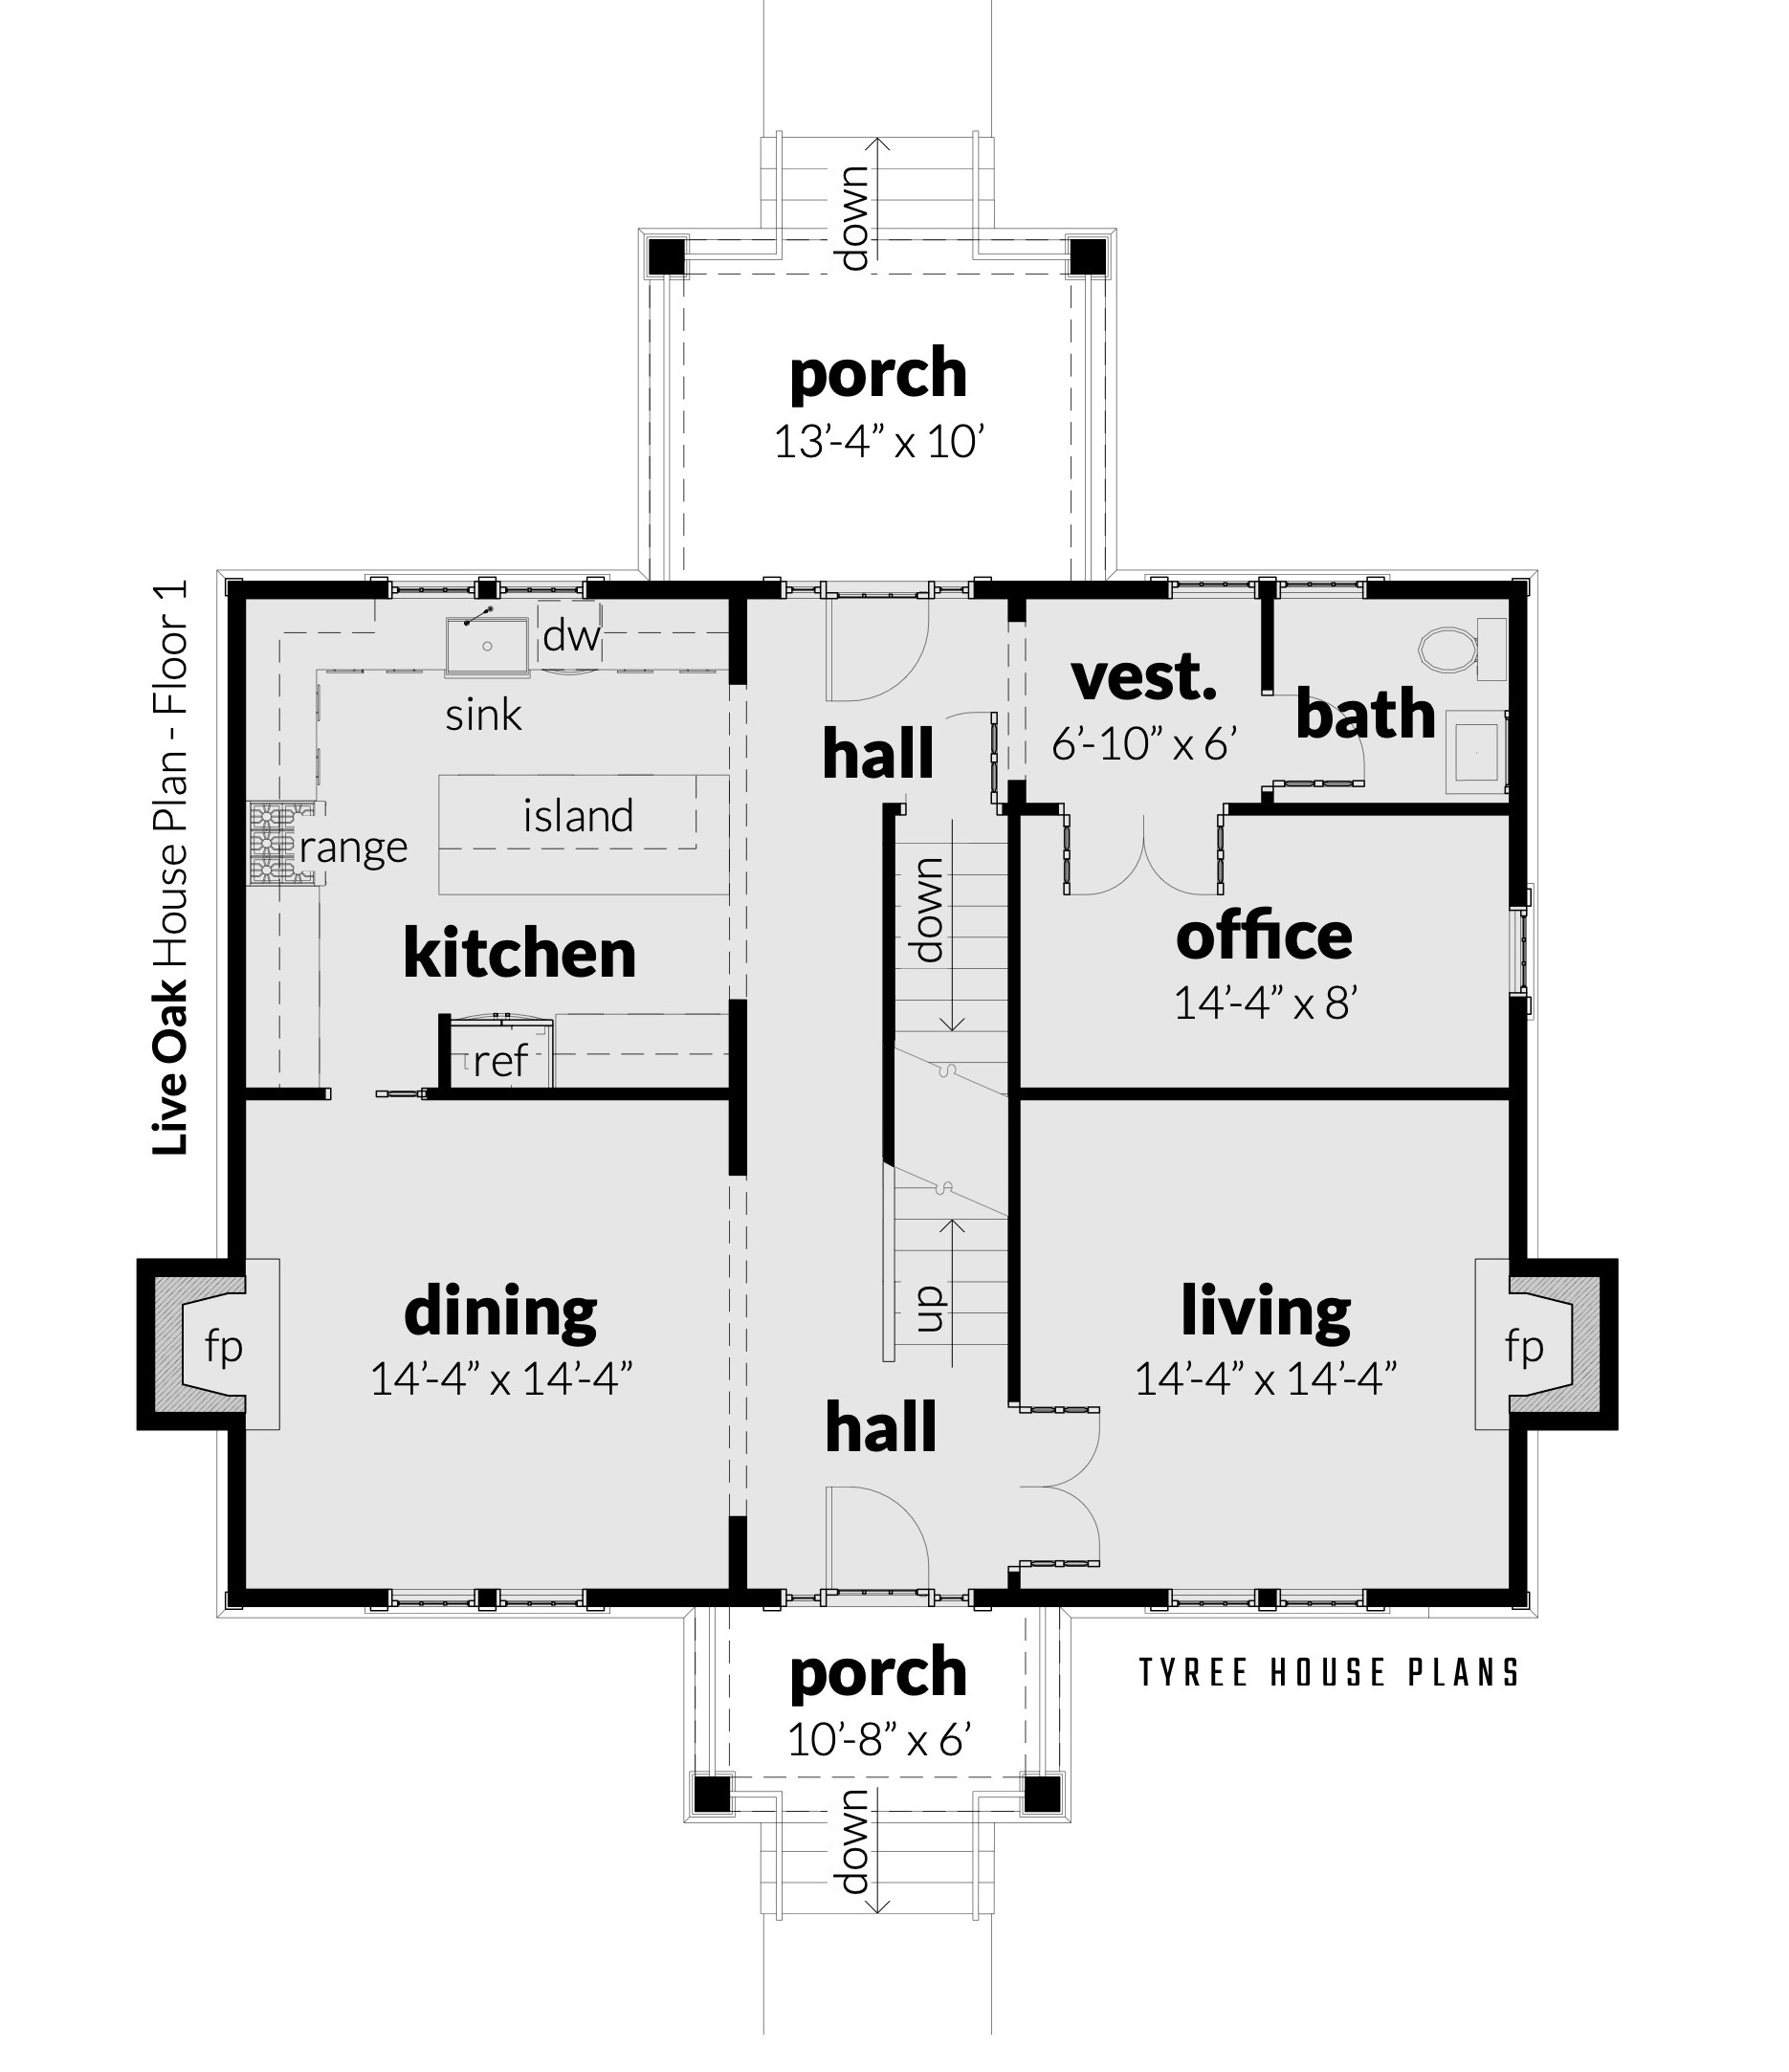 Floor 1 - Live Oak by Tyree House Plans